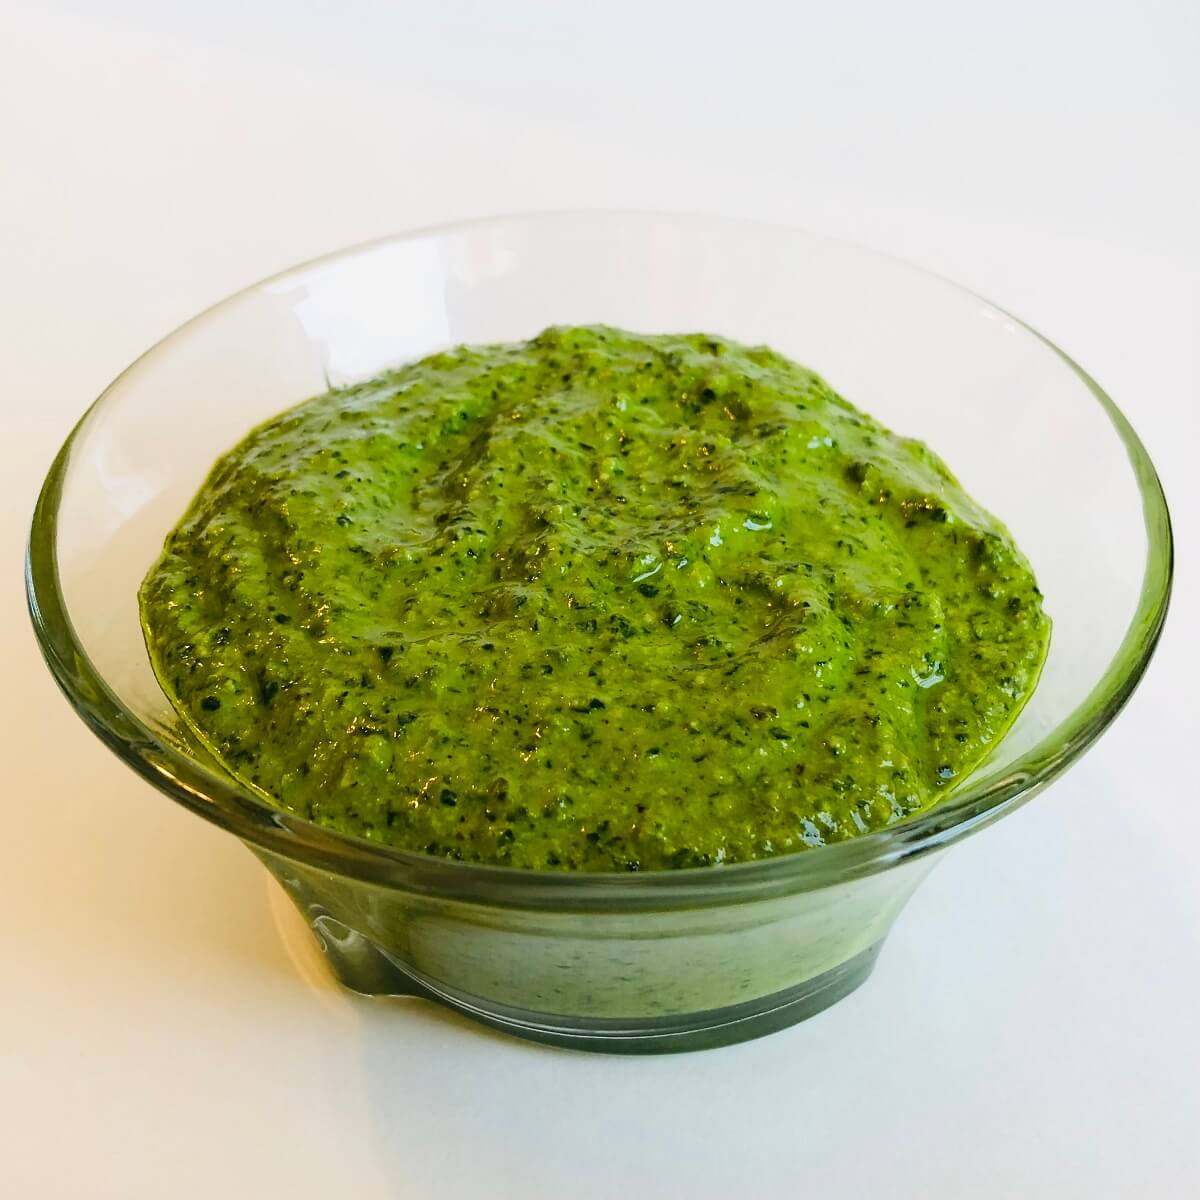 A glass bowl of parsley pesto sauce.